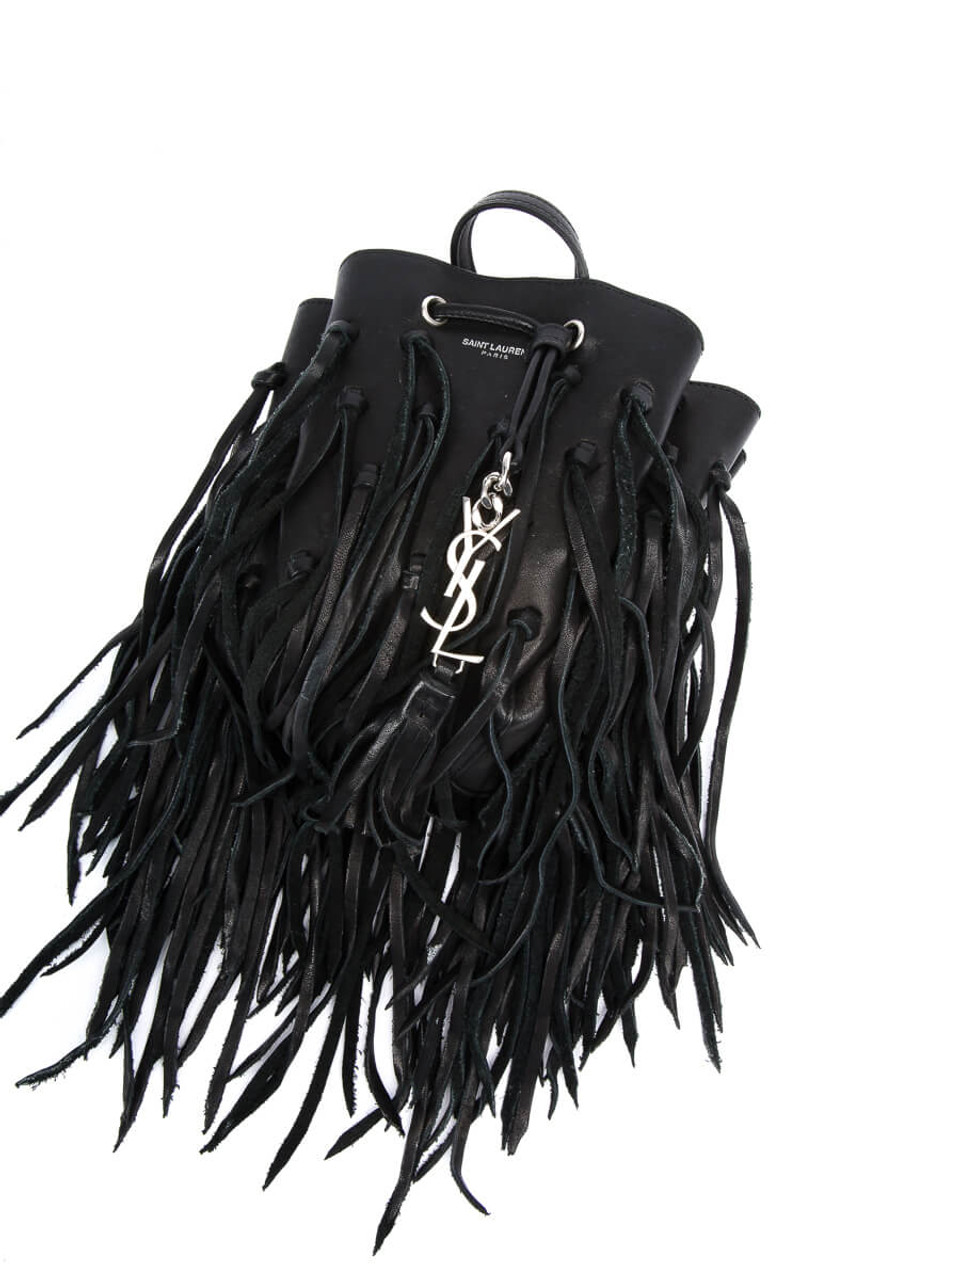 Yves Saint Laurent Women's Monogramme Bourse Mini Fringed Bucket Bag Black Leather